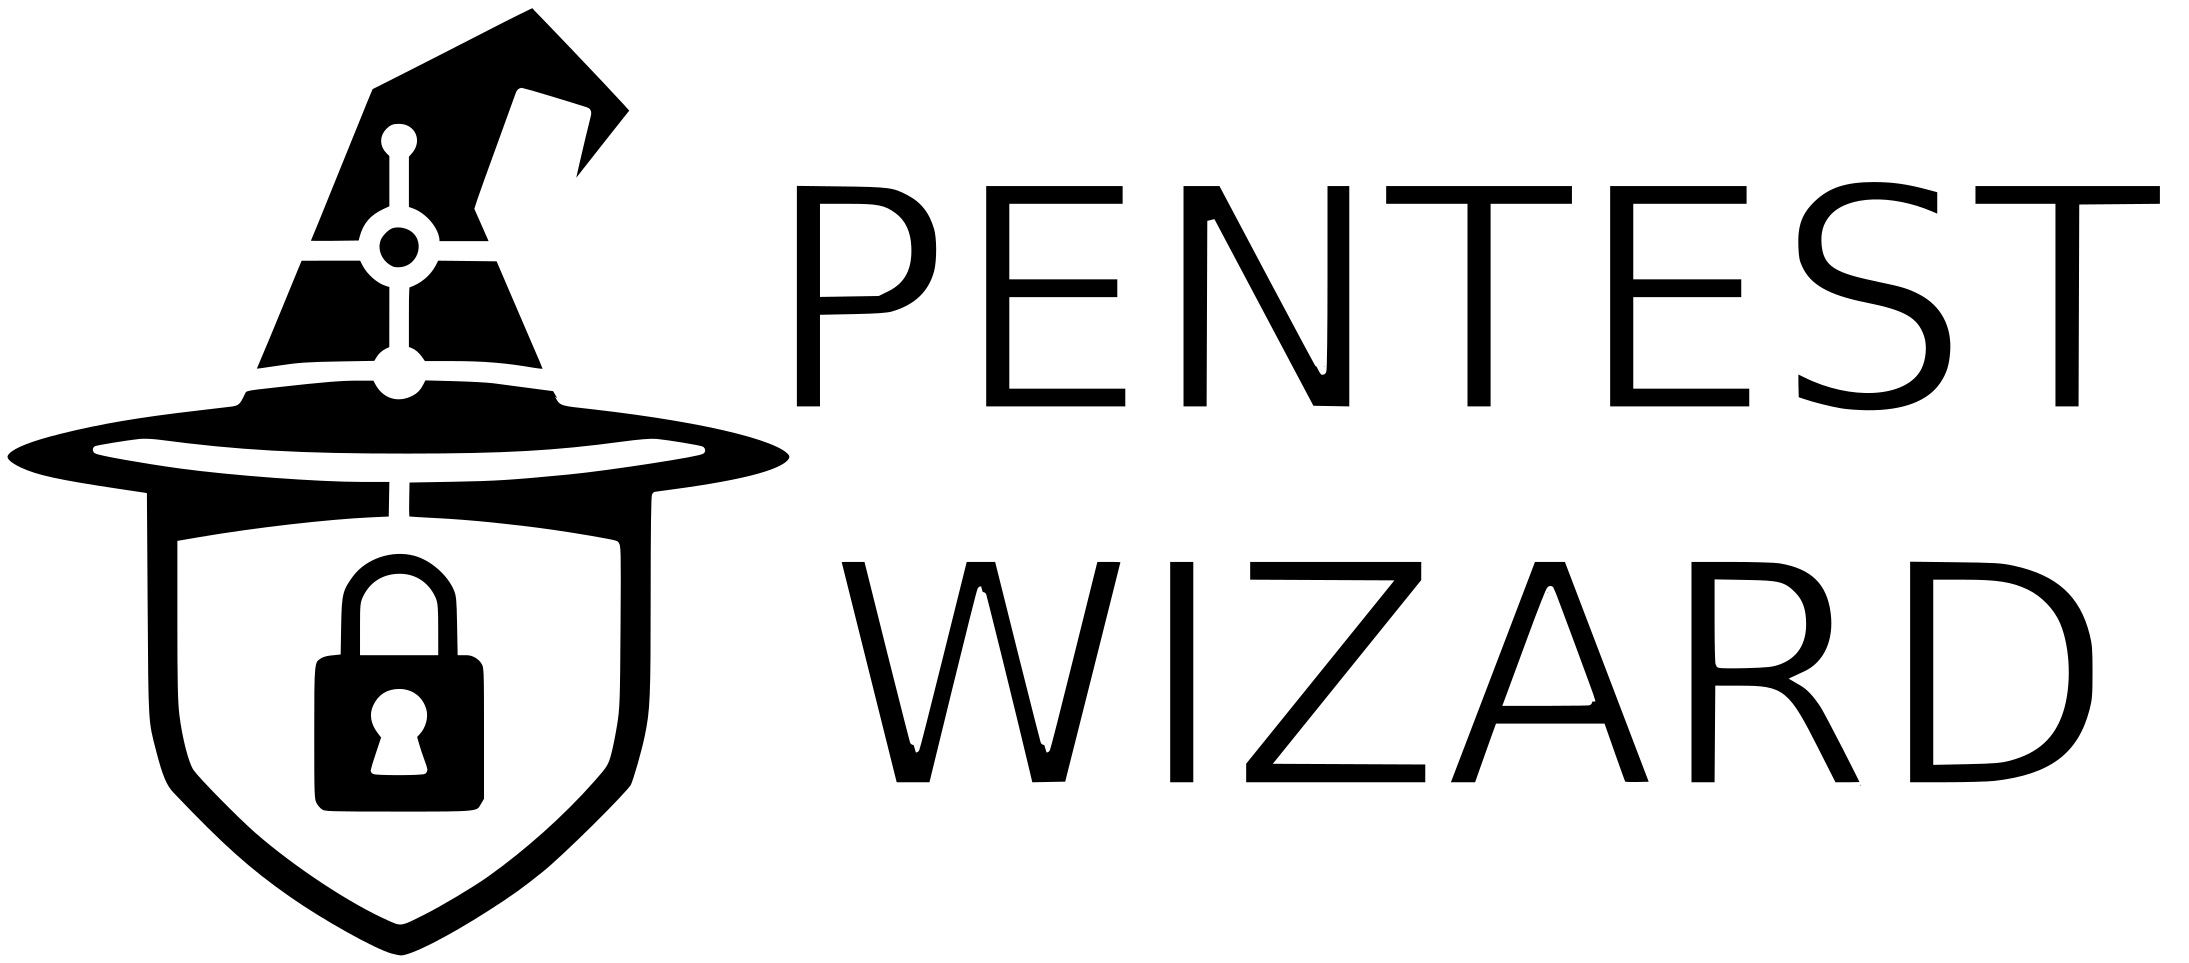 pentest wizard logo